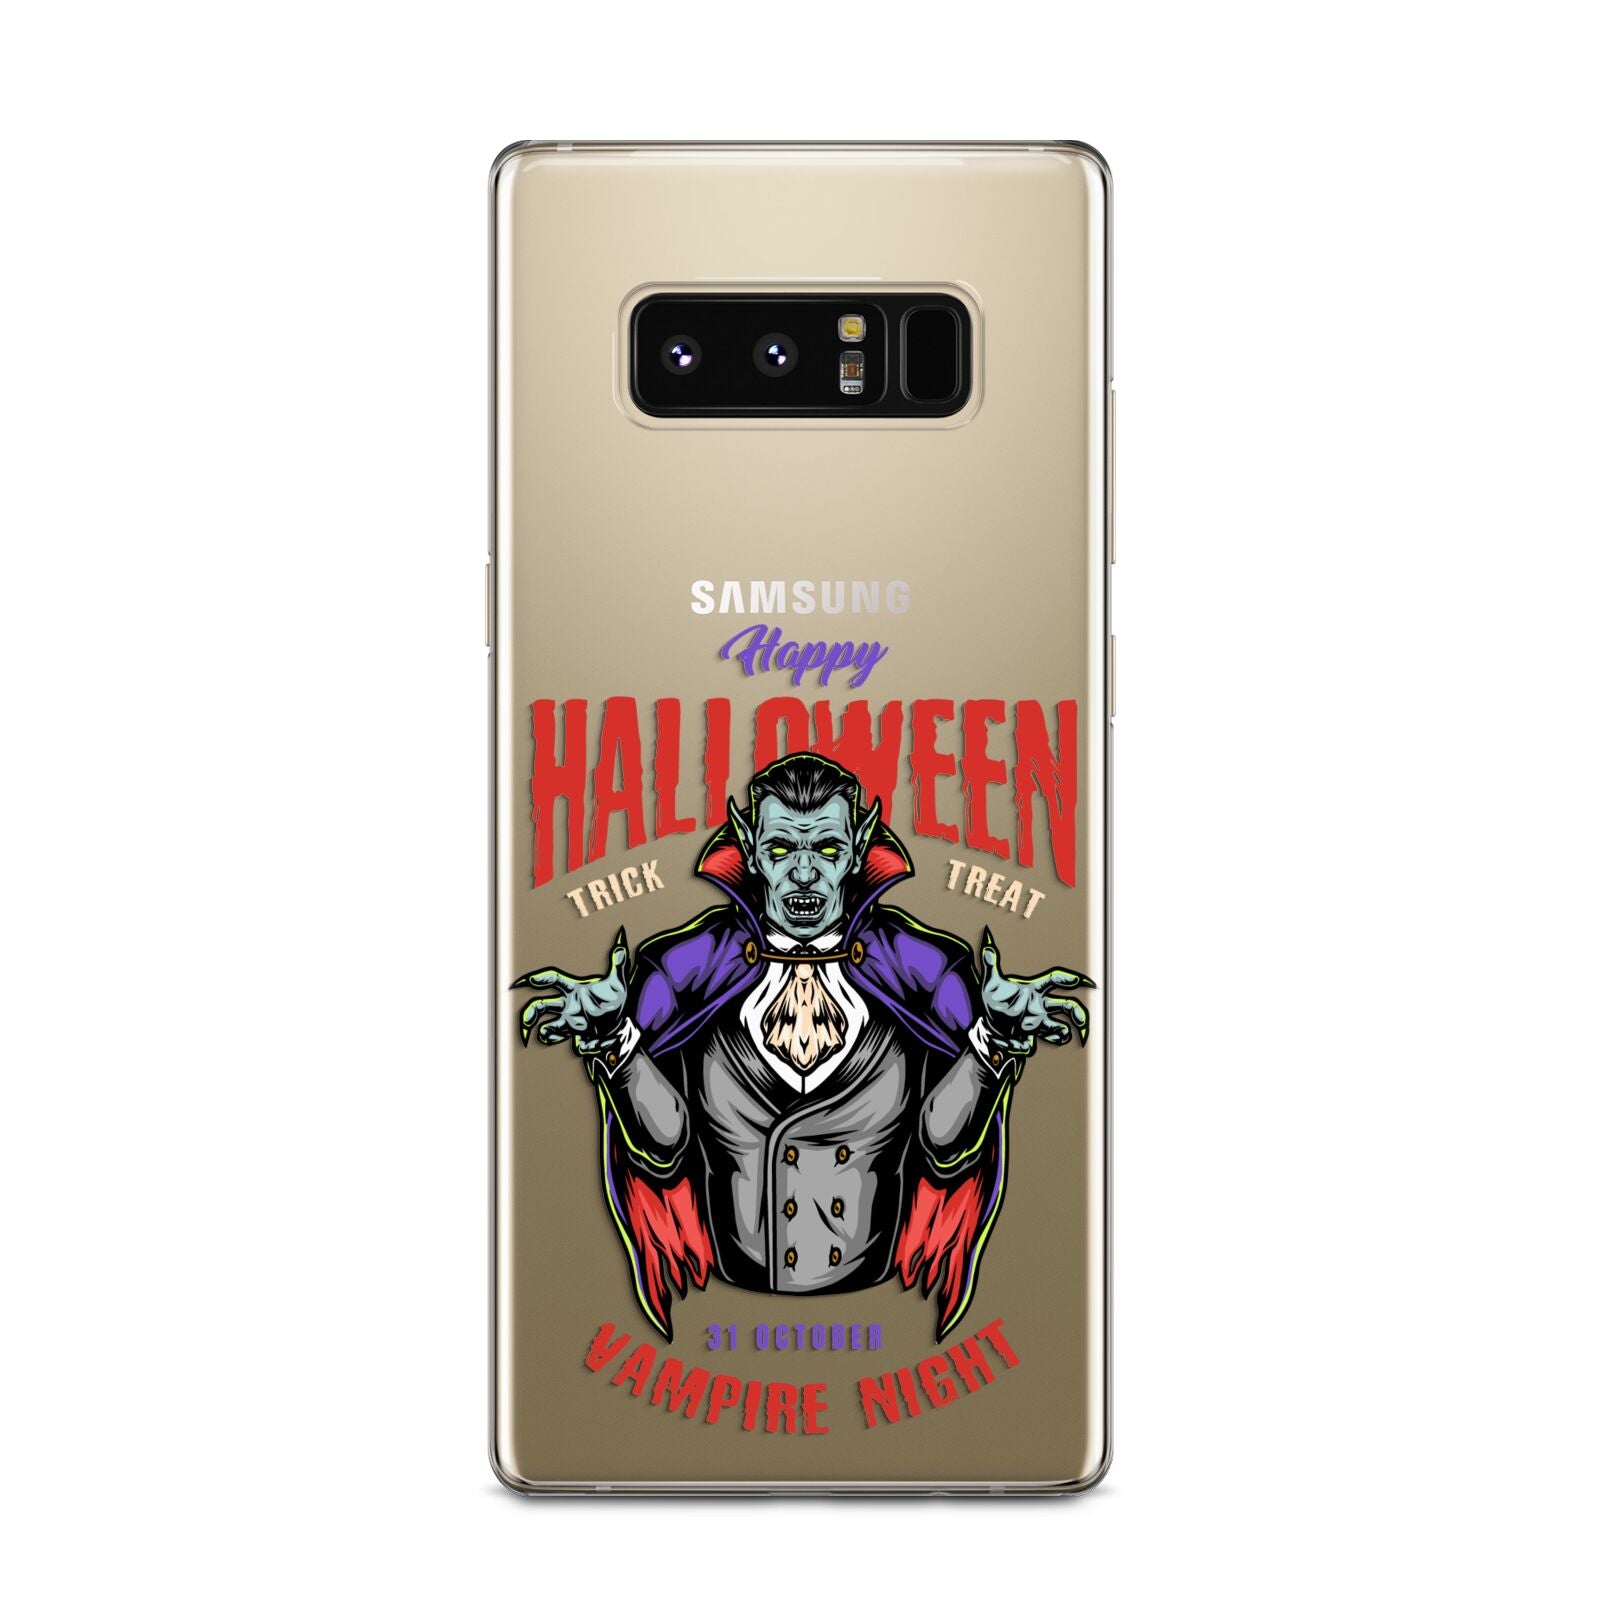 Vampire Night Samsung Galaxy Note 8 Case